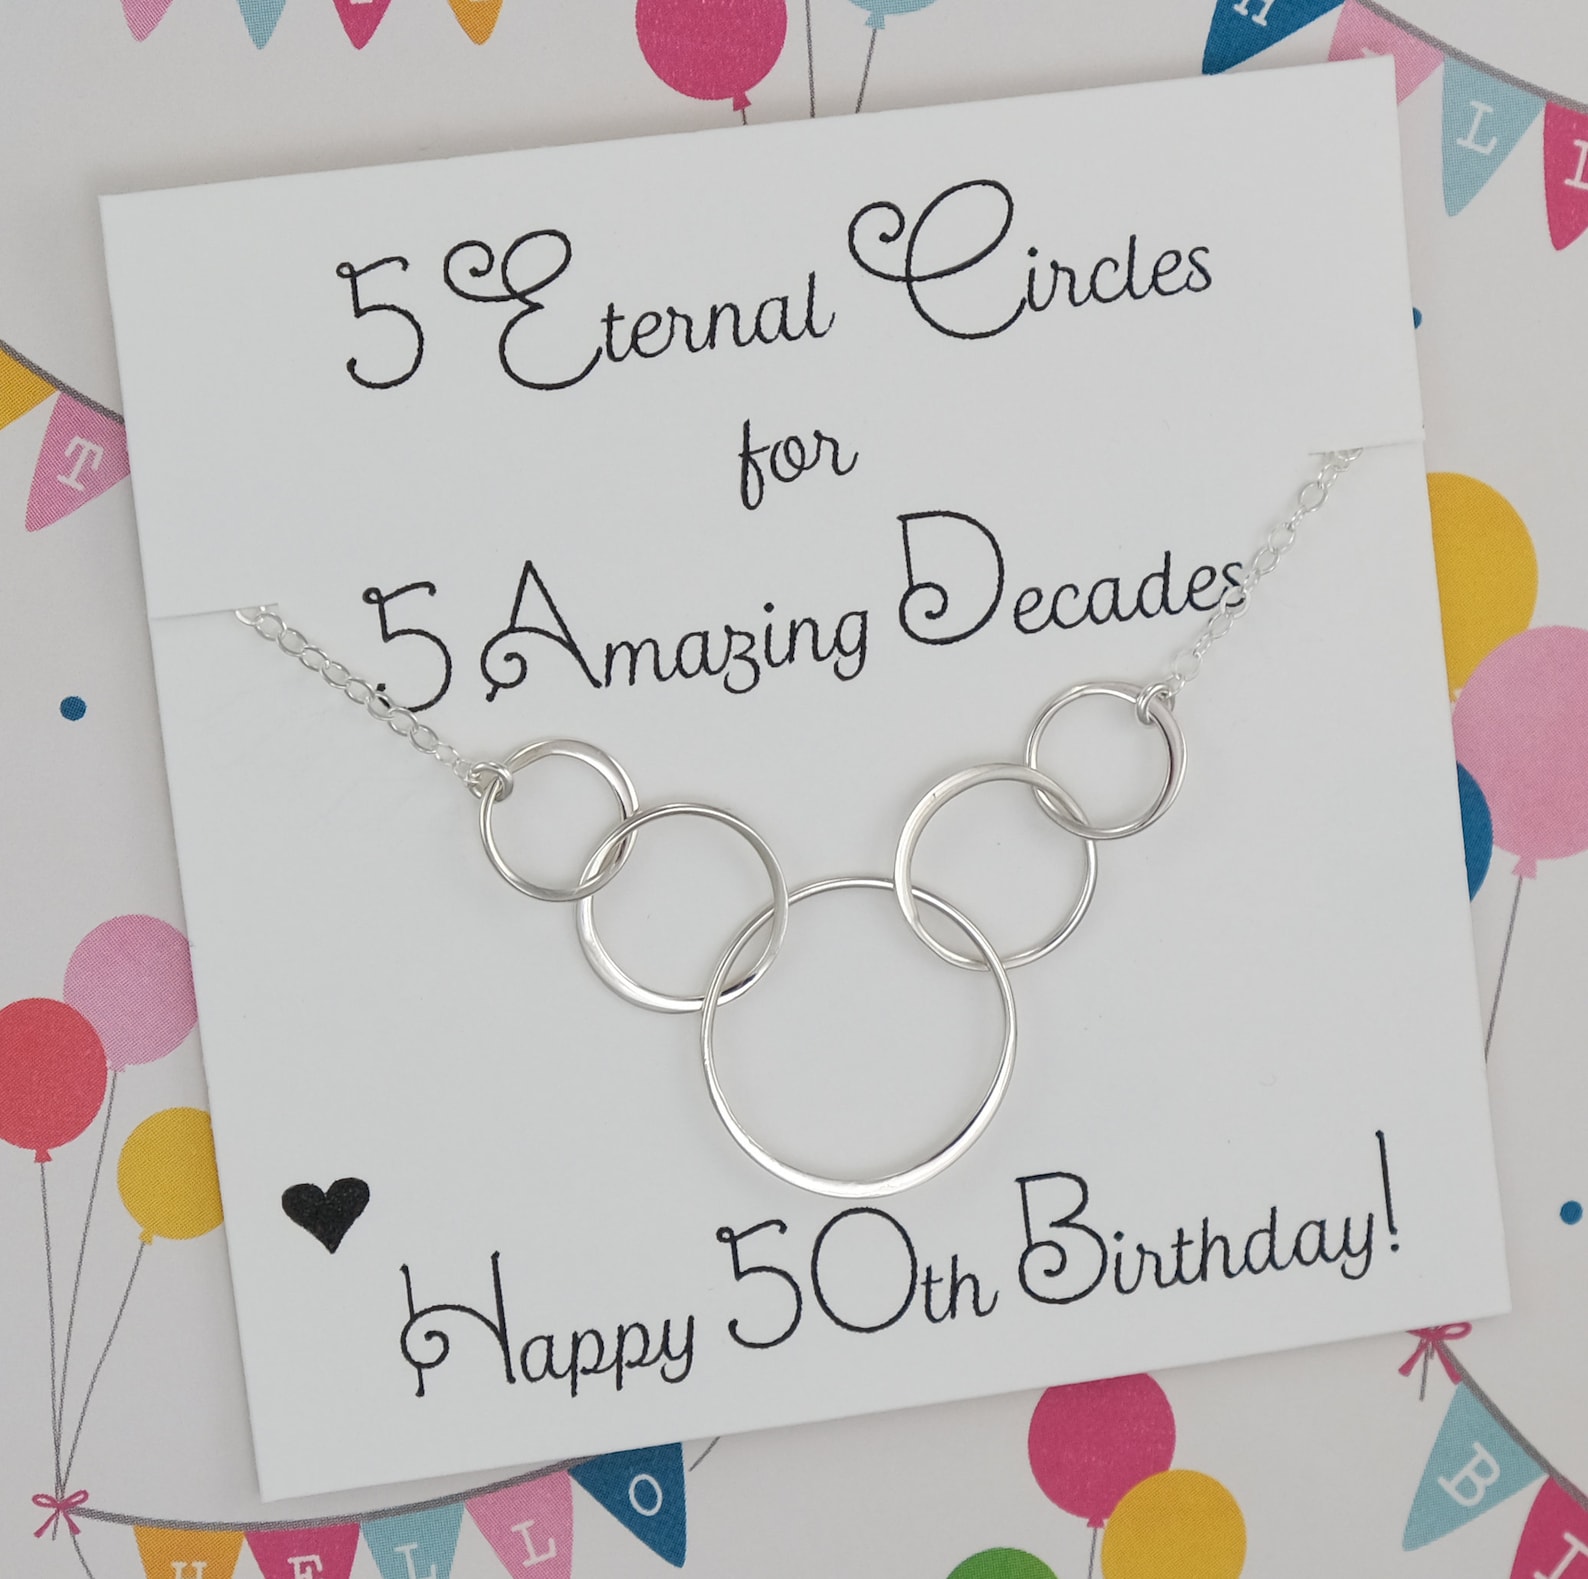 Best Friend Gift Ideas For 50th Birthday